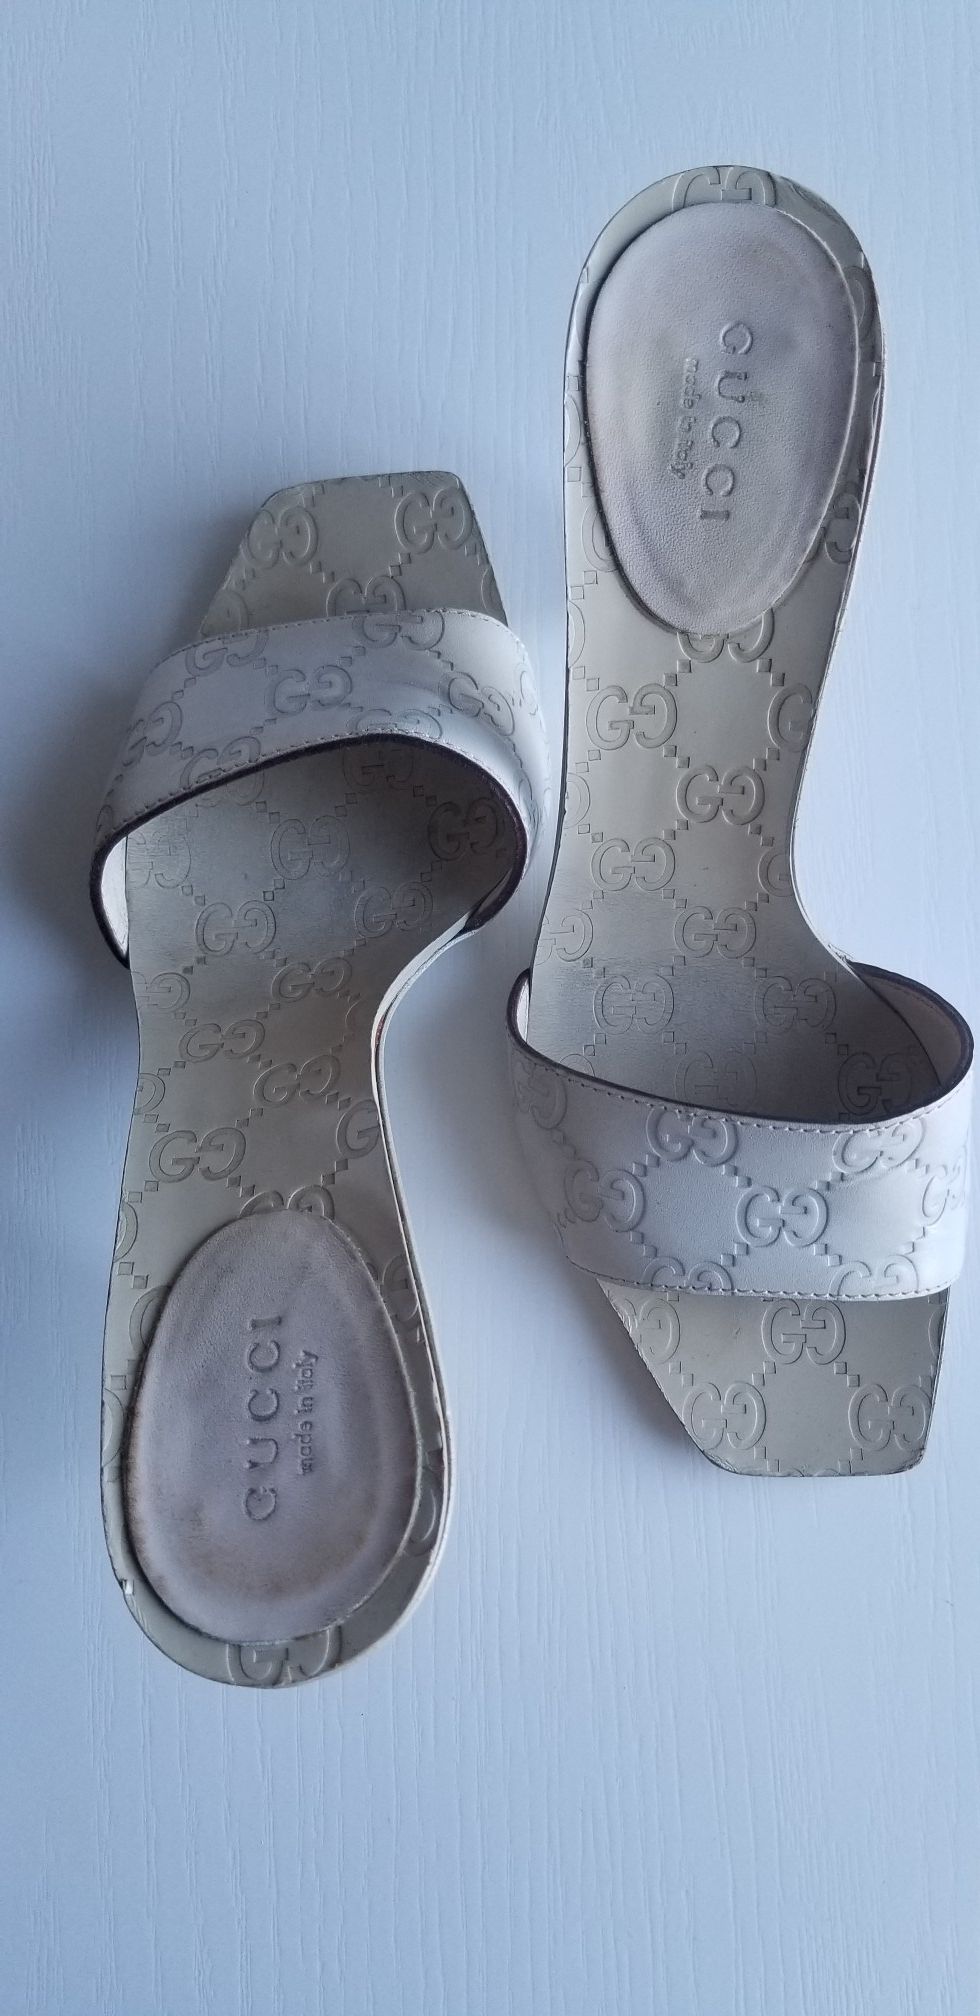 Gucci Bone white Leather shoes size 6 1/2